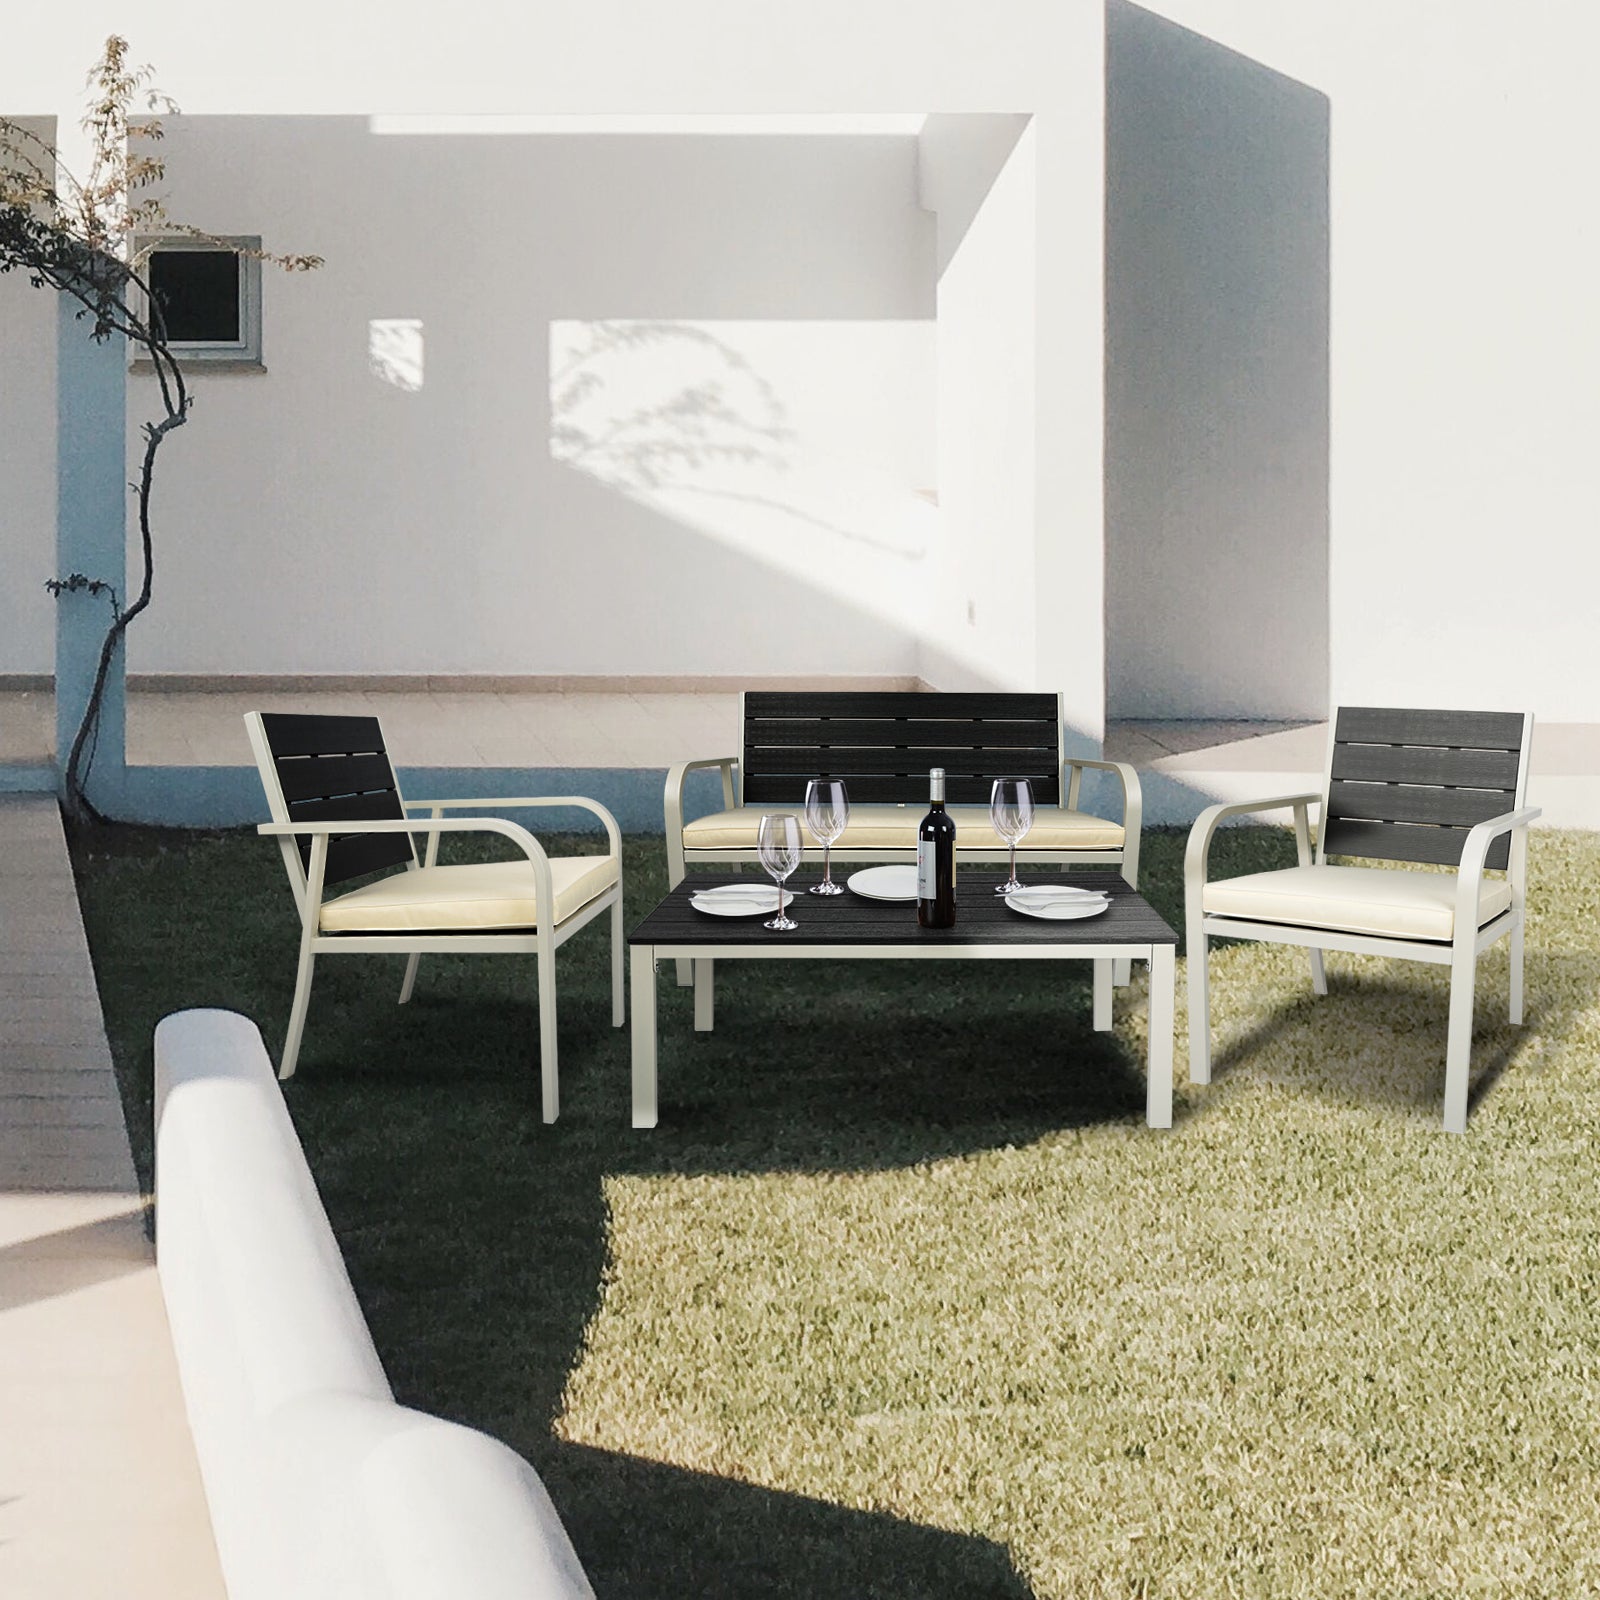 4 Pcs Patio Garden Sofa Set - Ukerr Home